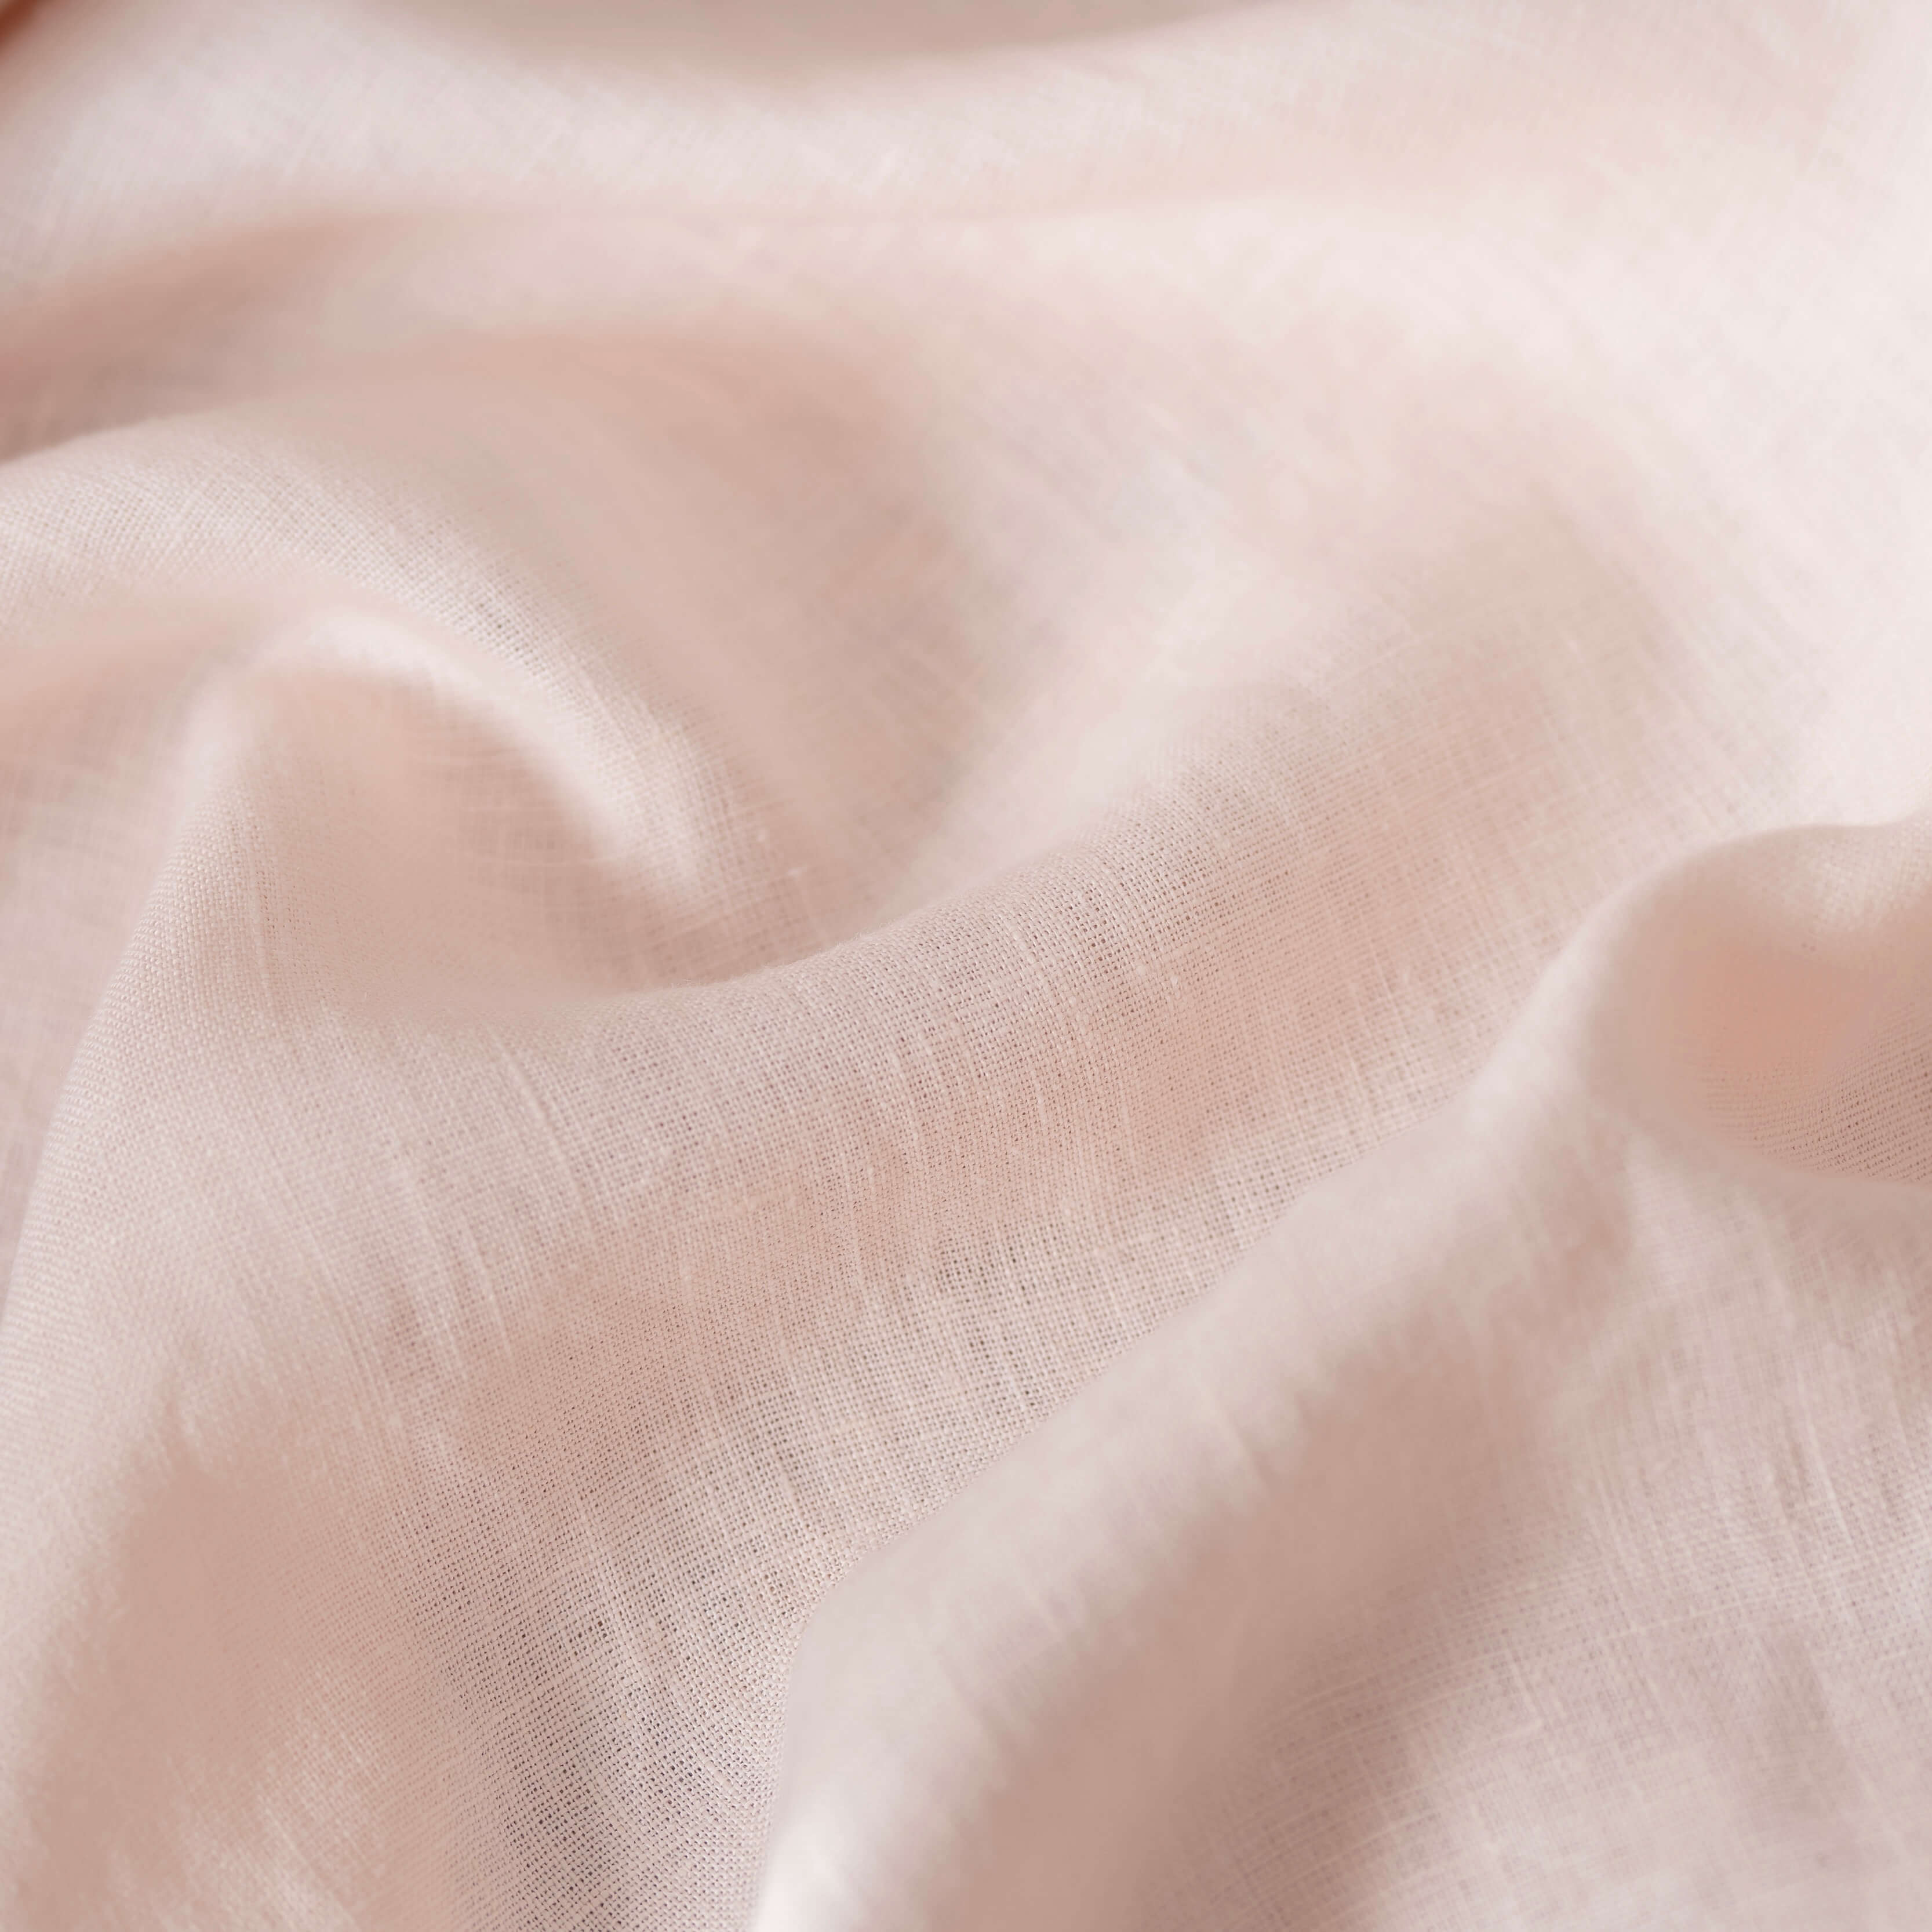 Buy Crisp White Linen Blend Fabric – de Linum